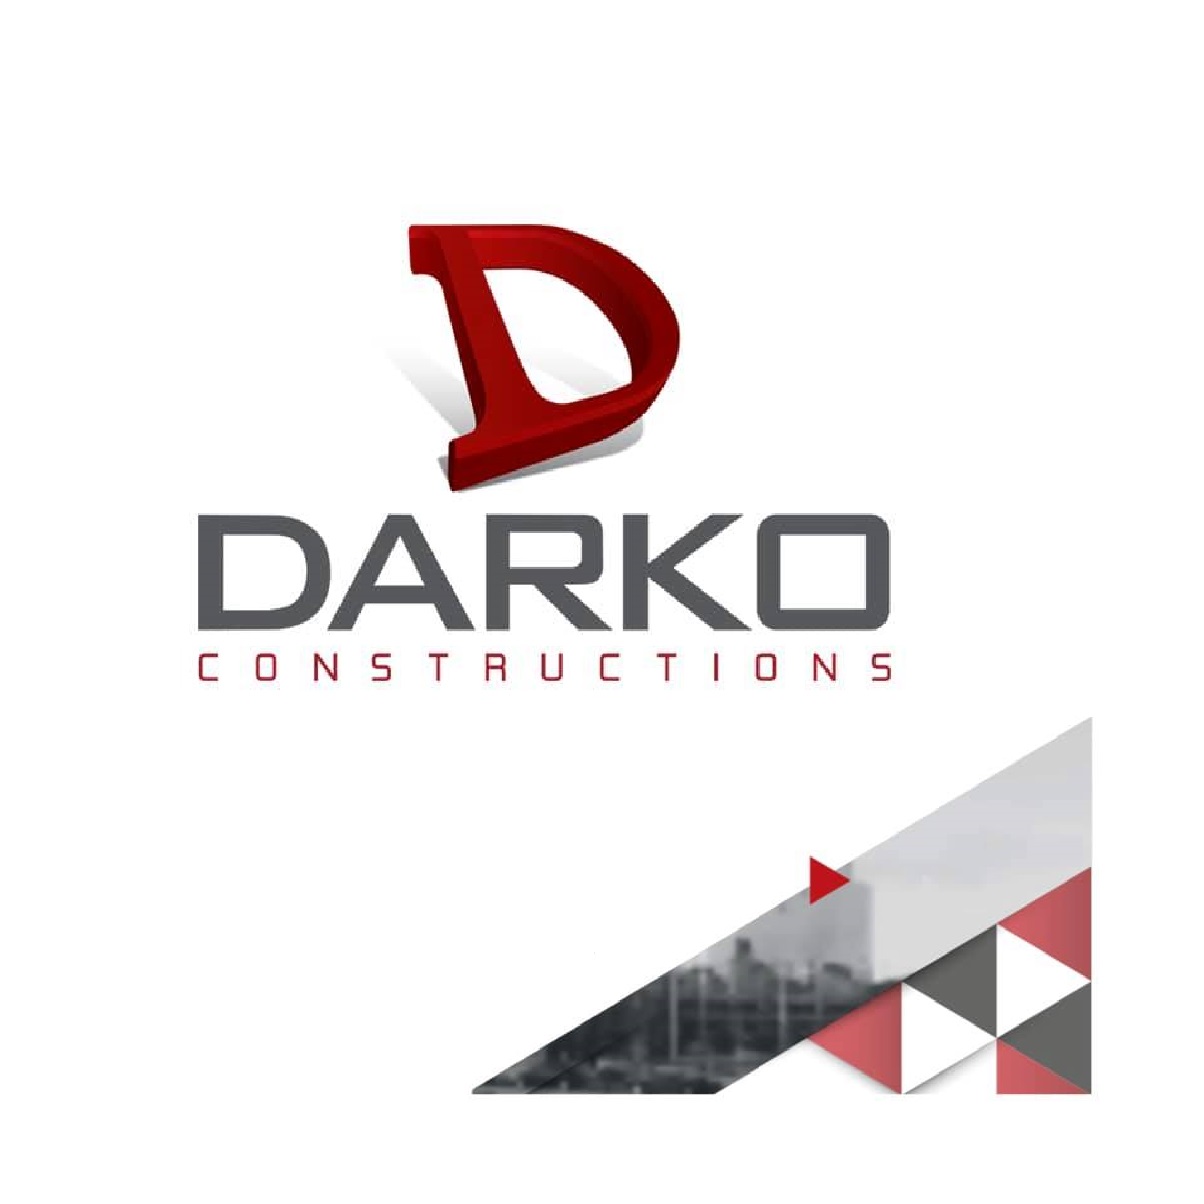 darko Constructions